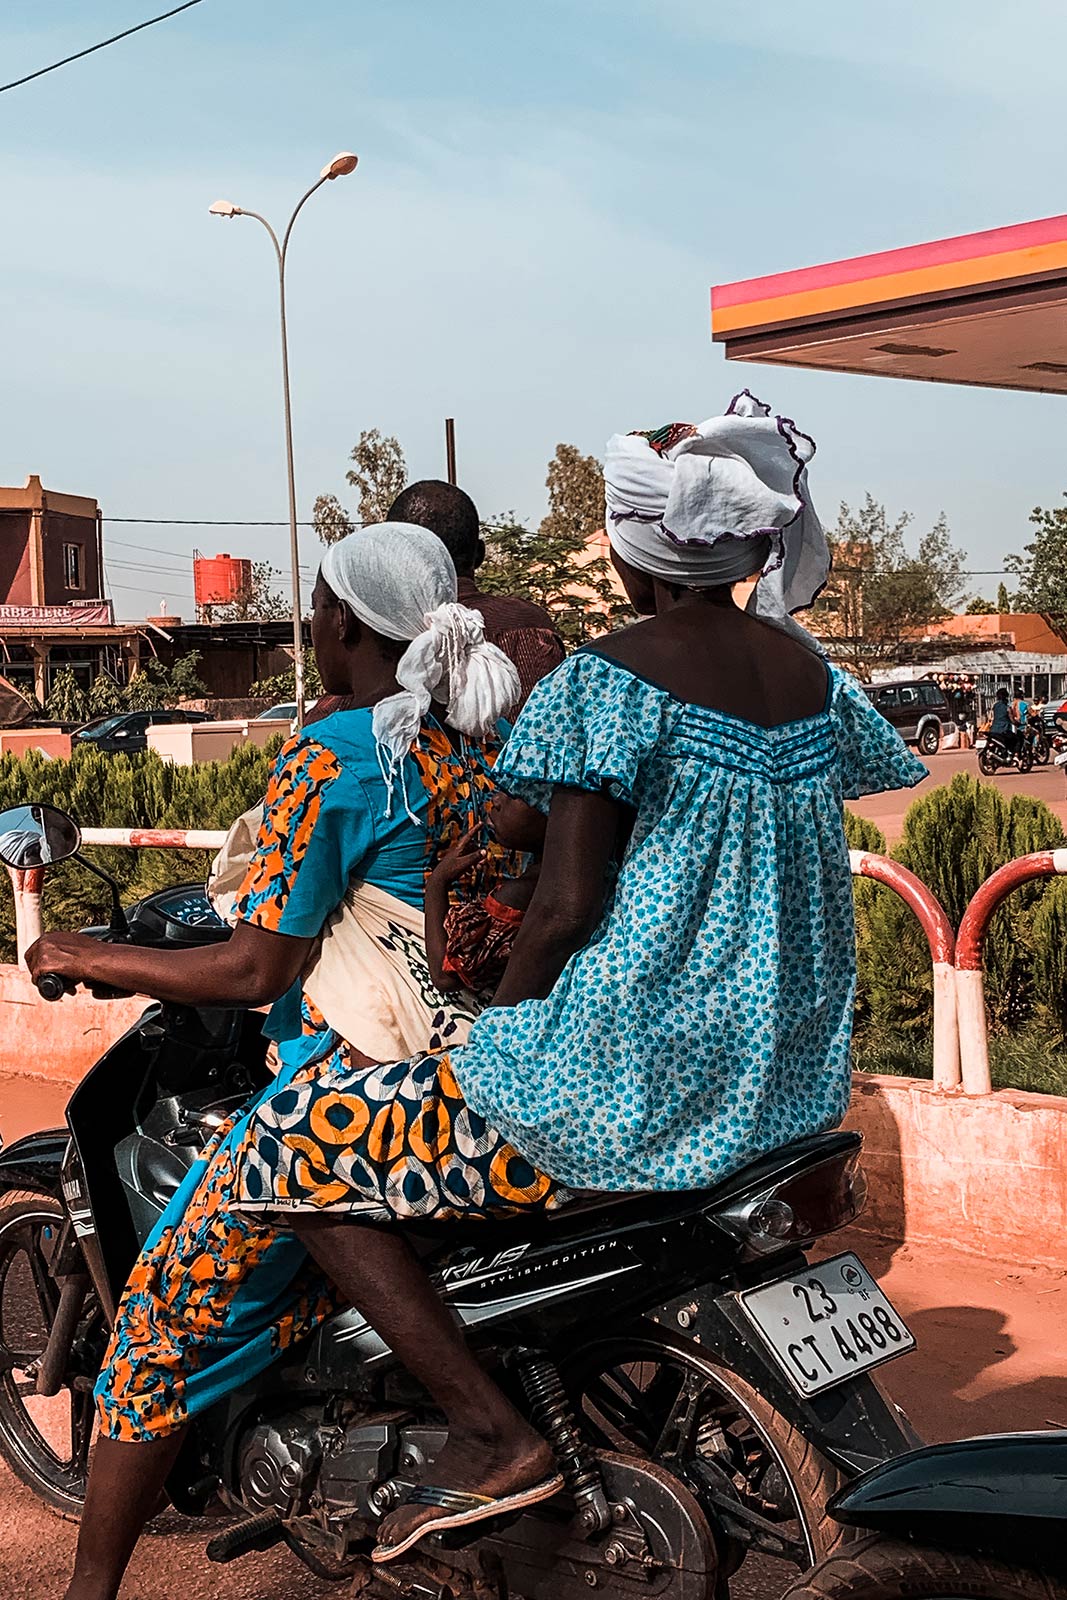 Locals riding motorcycle in Ouagadougou, Burkina Faso. The heat of Ouaga